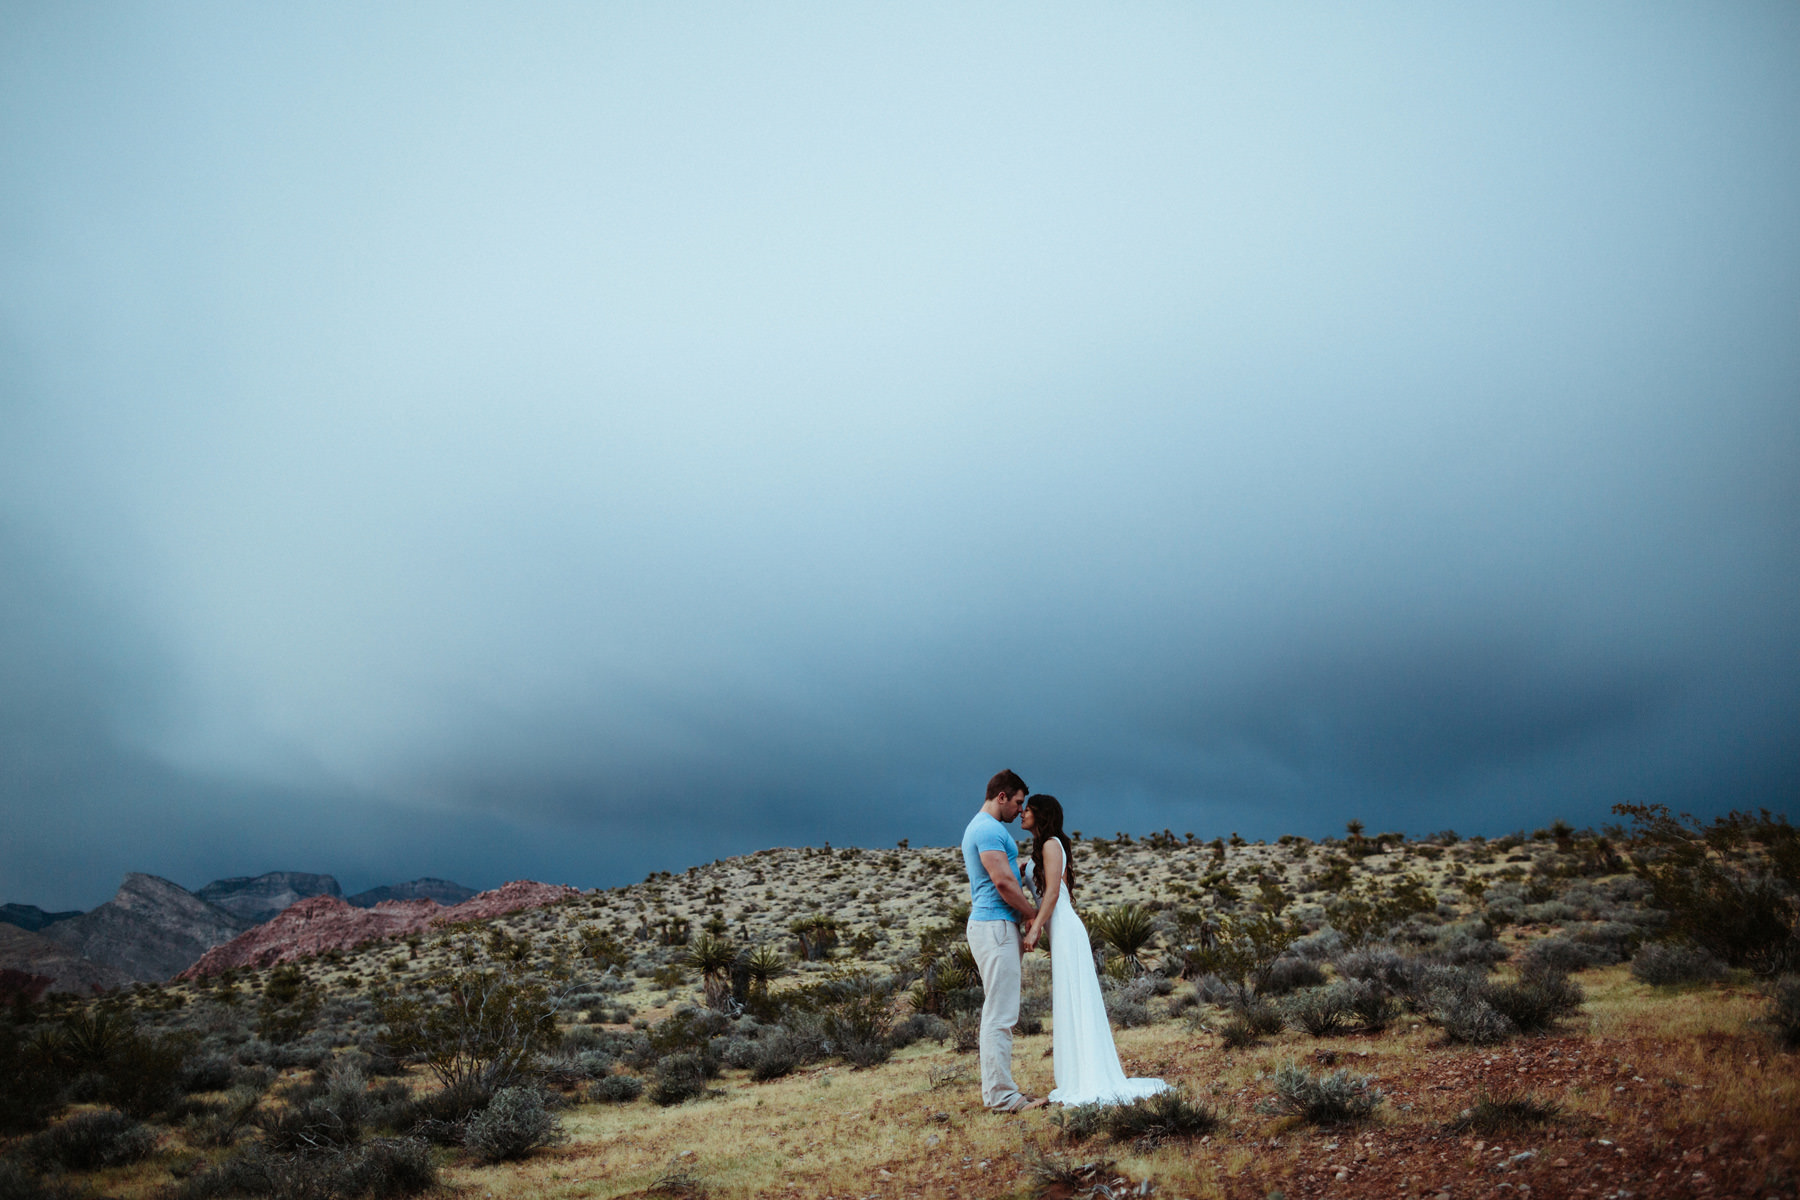 186_Red Rock Canyon Desert Engagement Session Las Vegas, Nevada_Kindling Wedding Photography.JPG